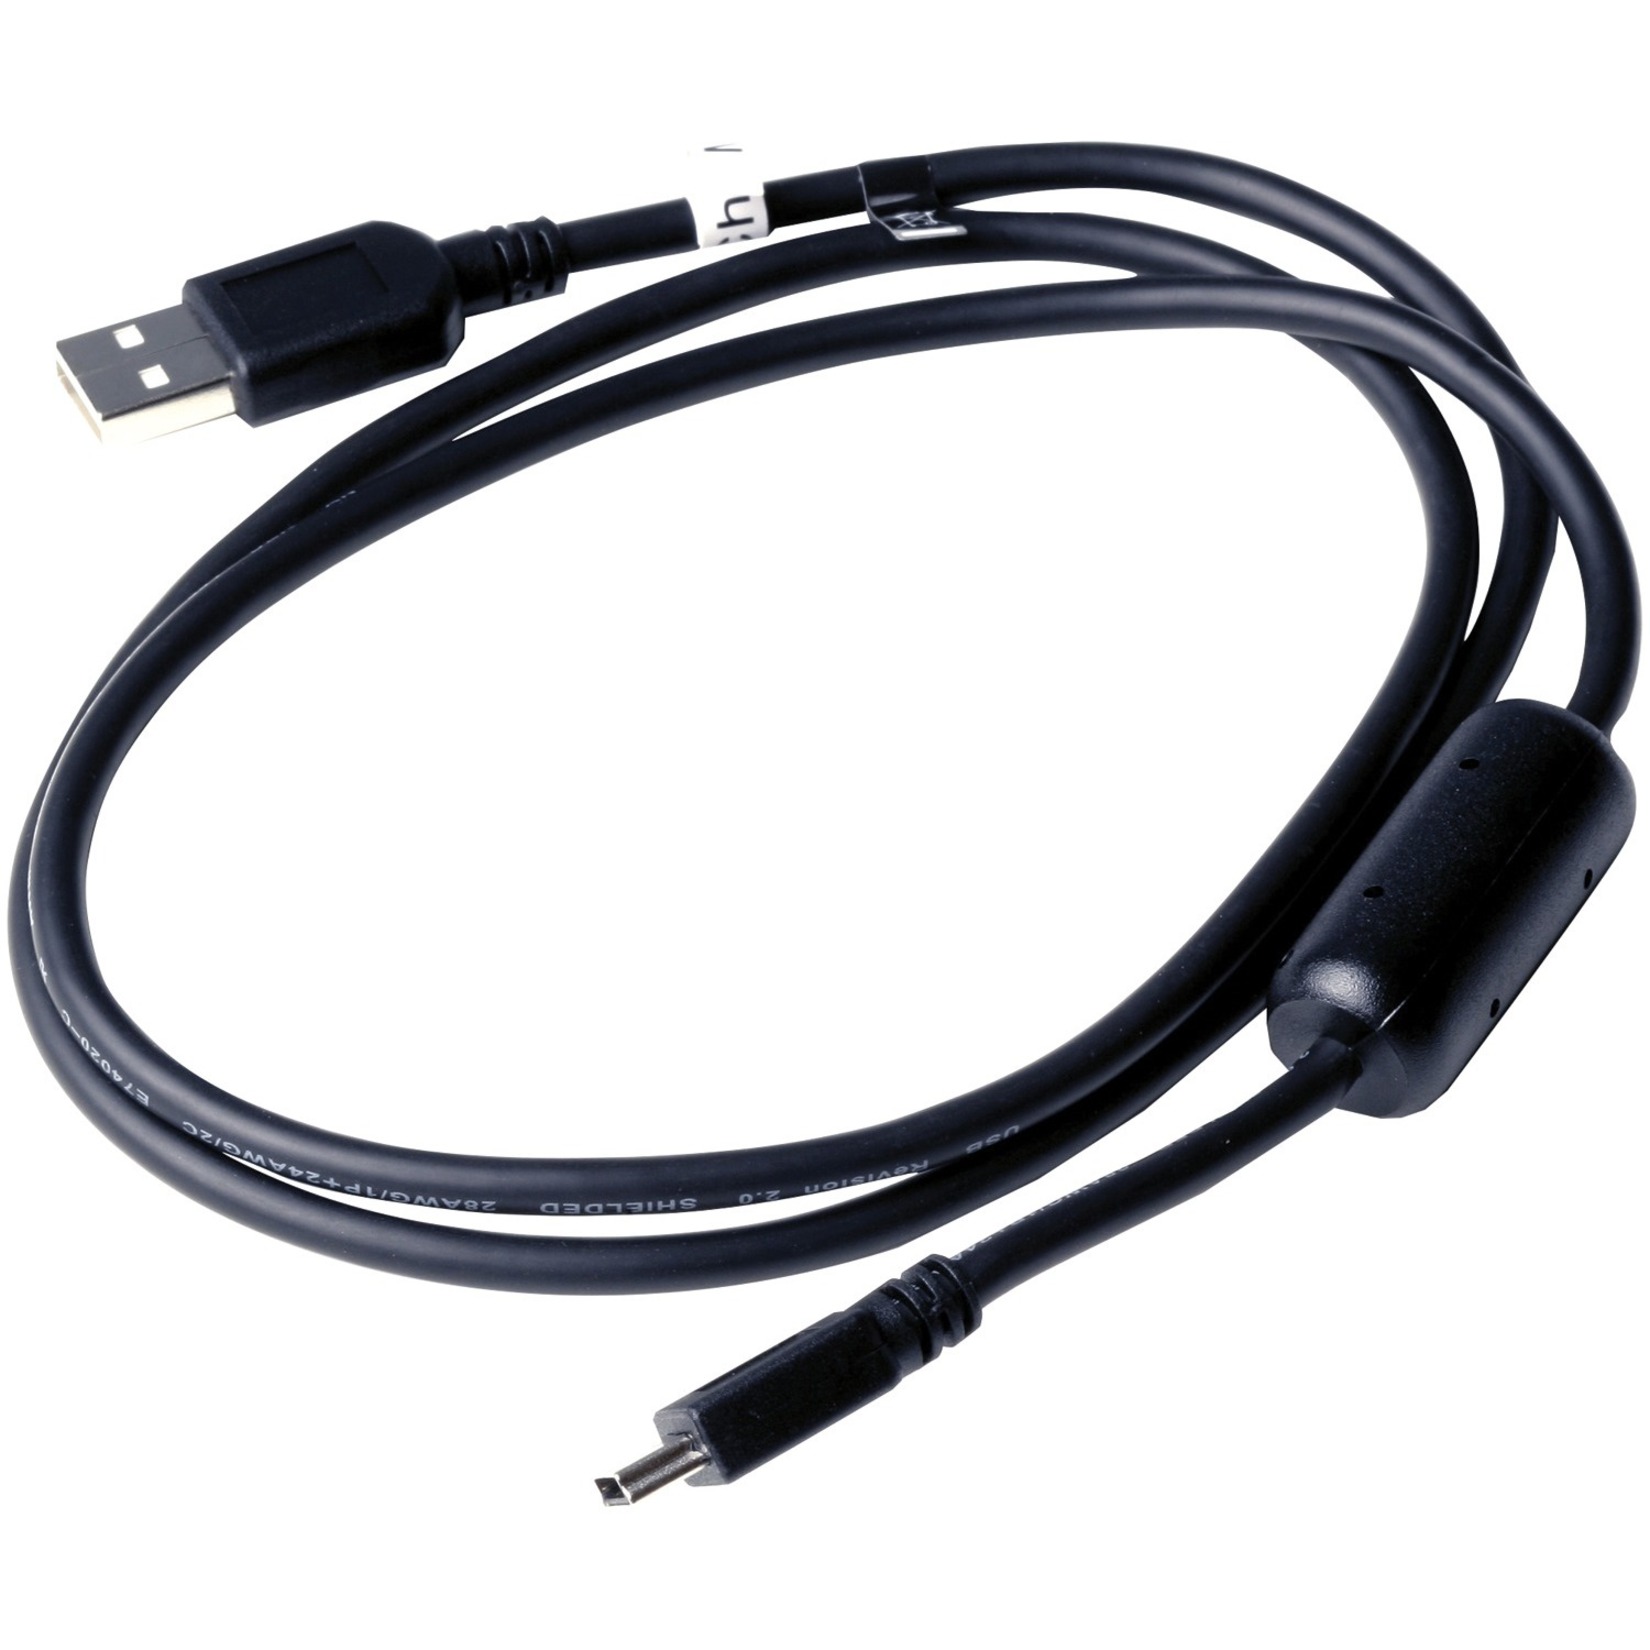 Garmin 010-10723-01 USB to Mini USB Data Cable - image 4 of 5